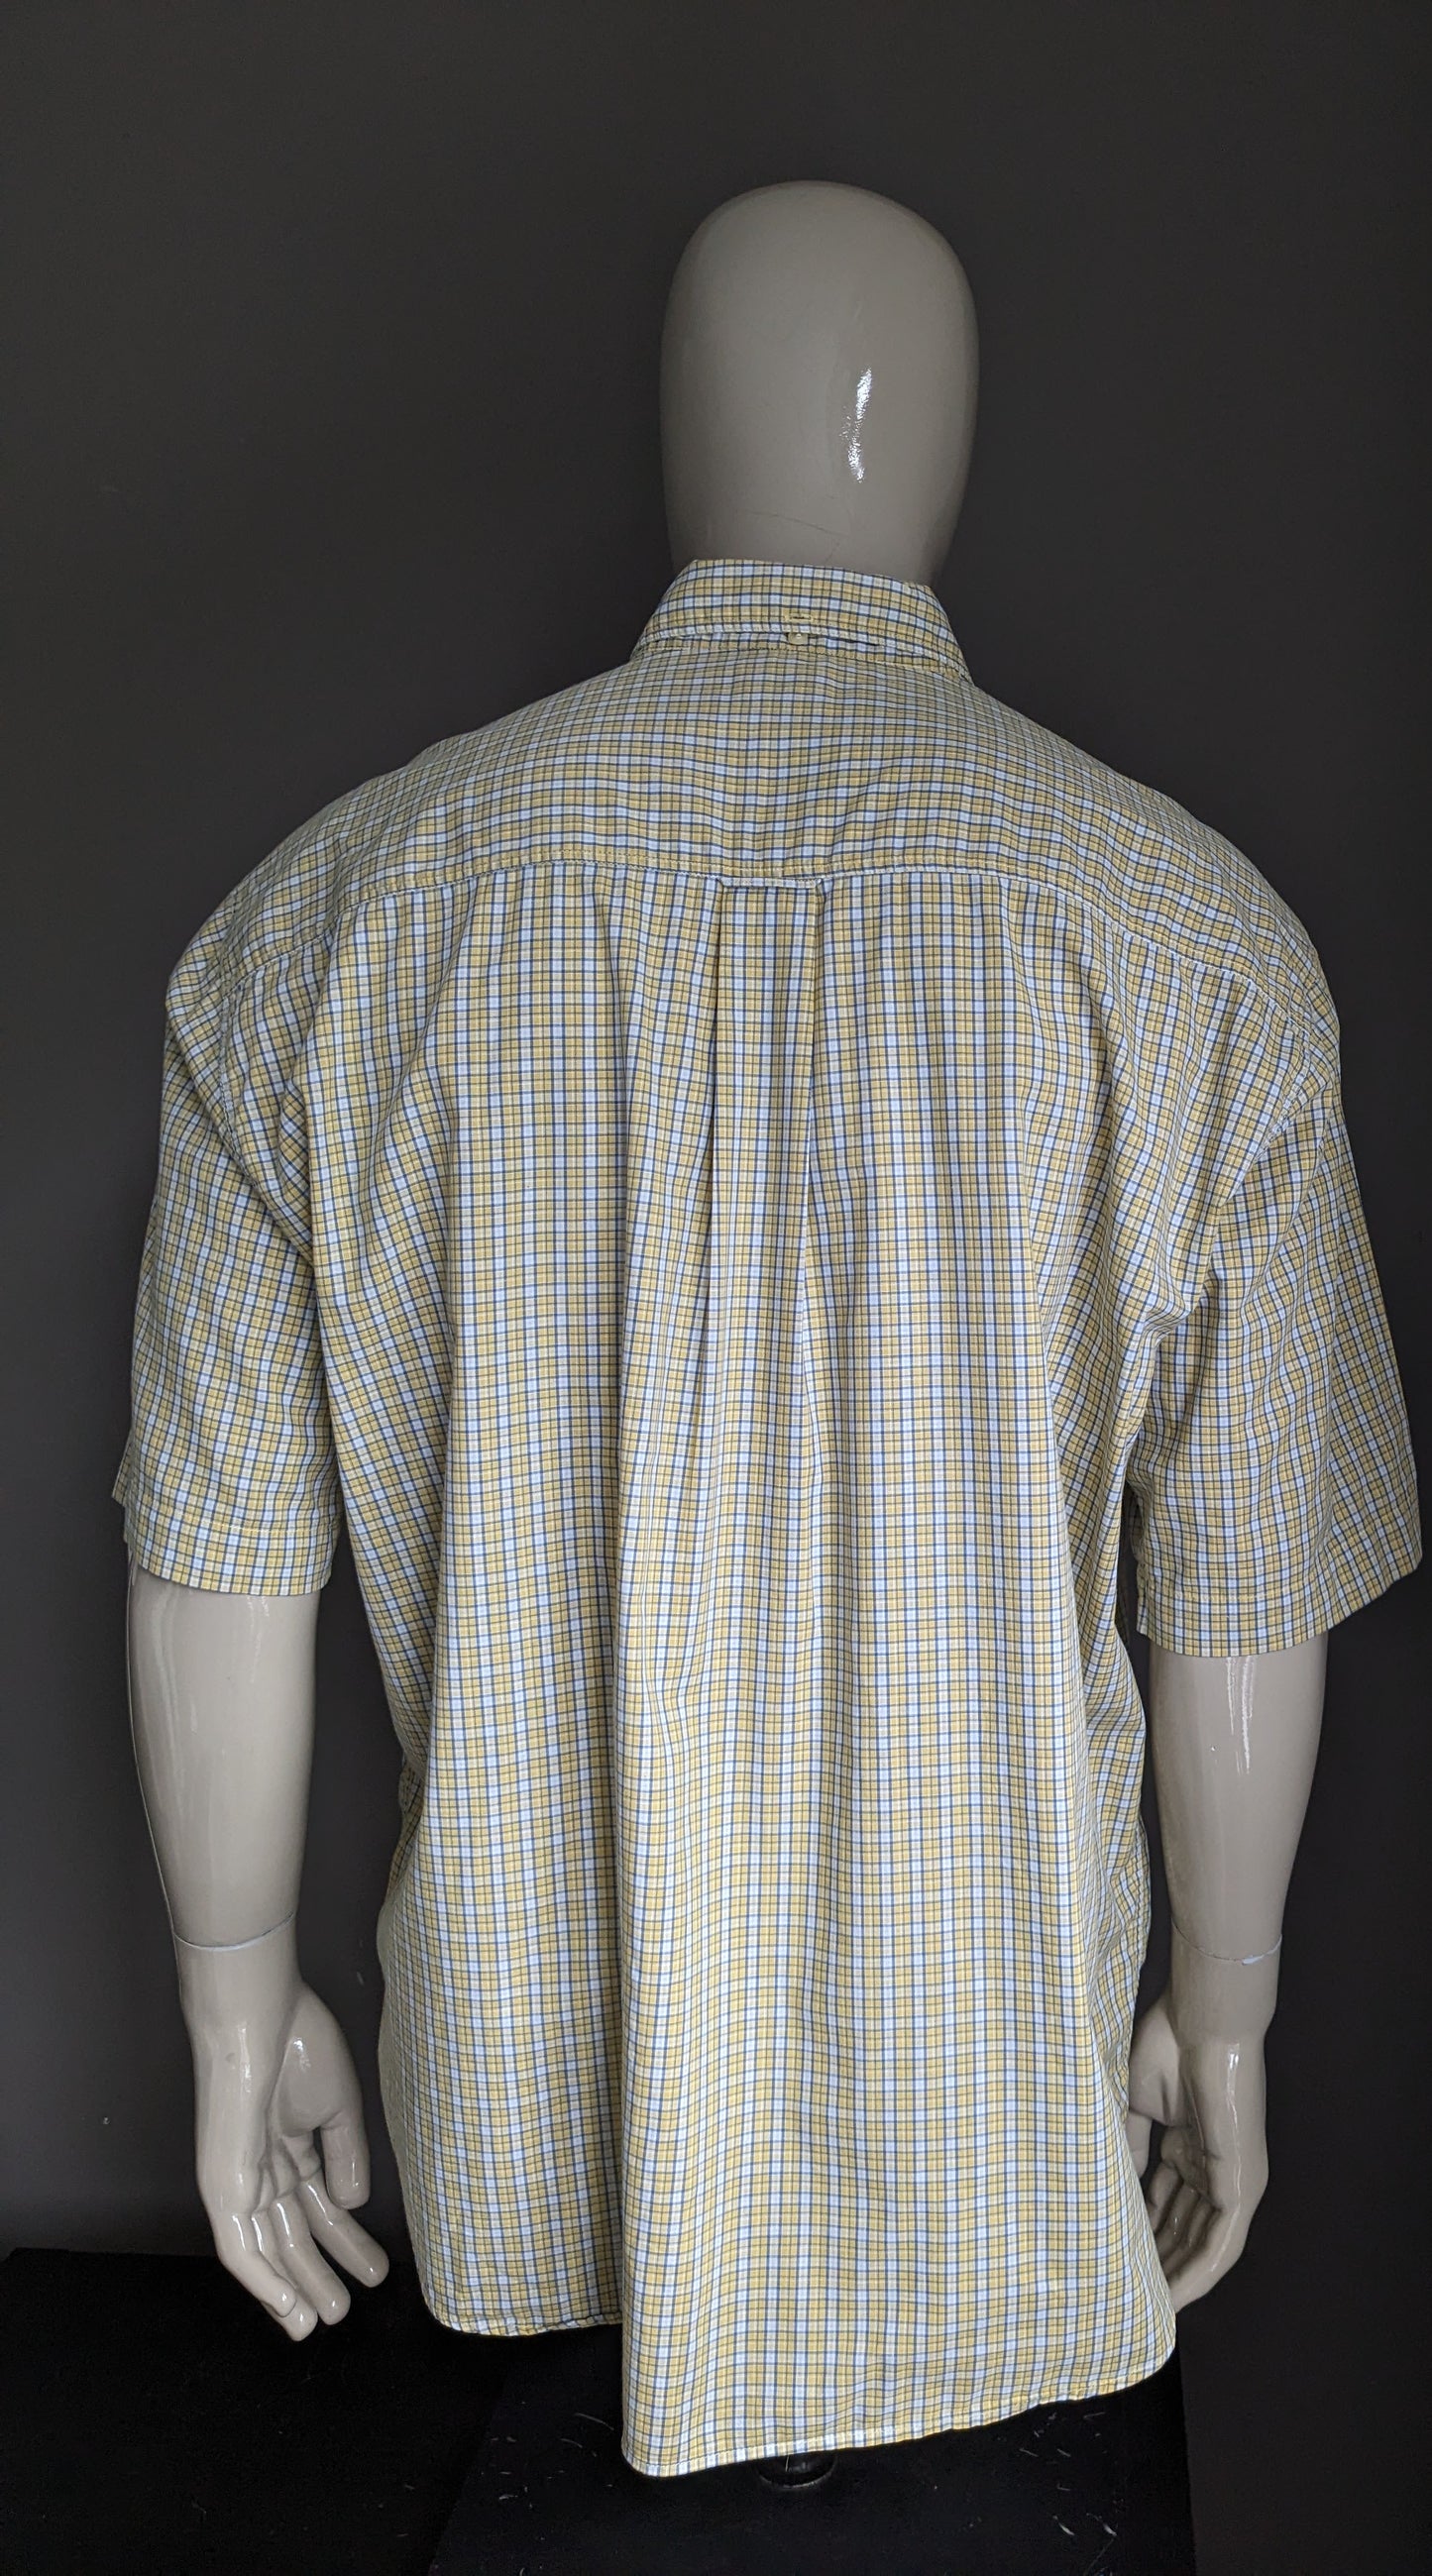 Burton Menswear Shirt Short Sleeve. Vérification du blanc bleu jaune. Taille xxl / 2xl.